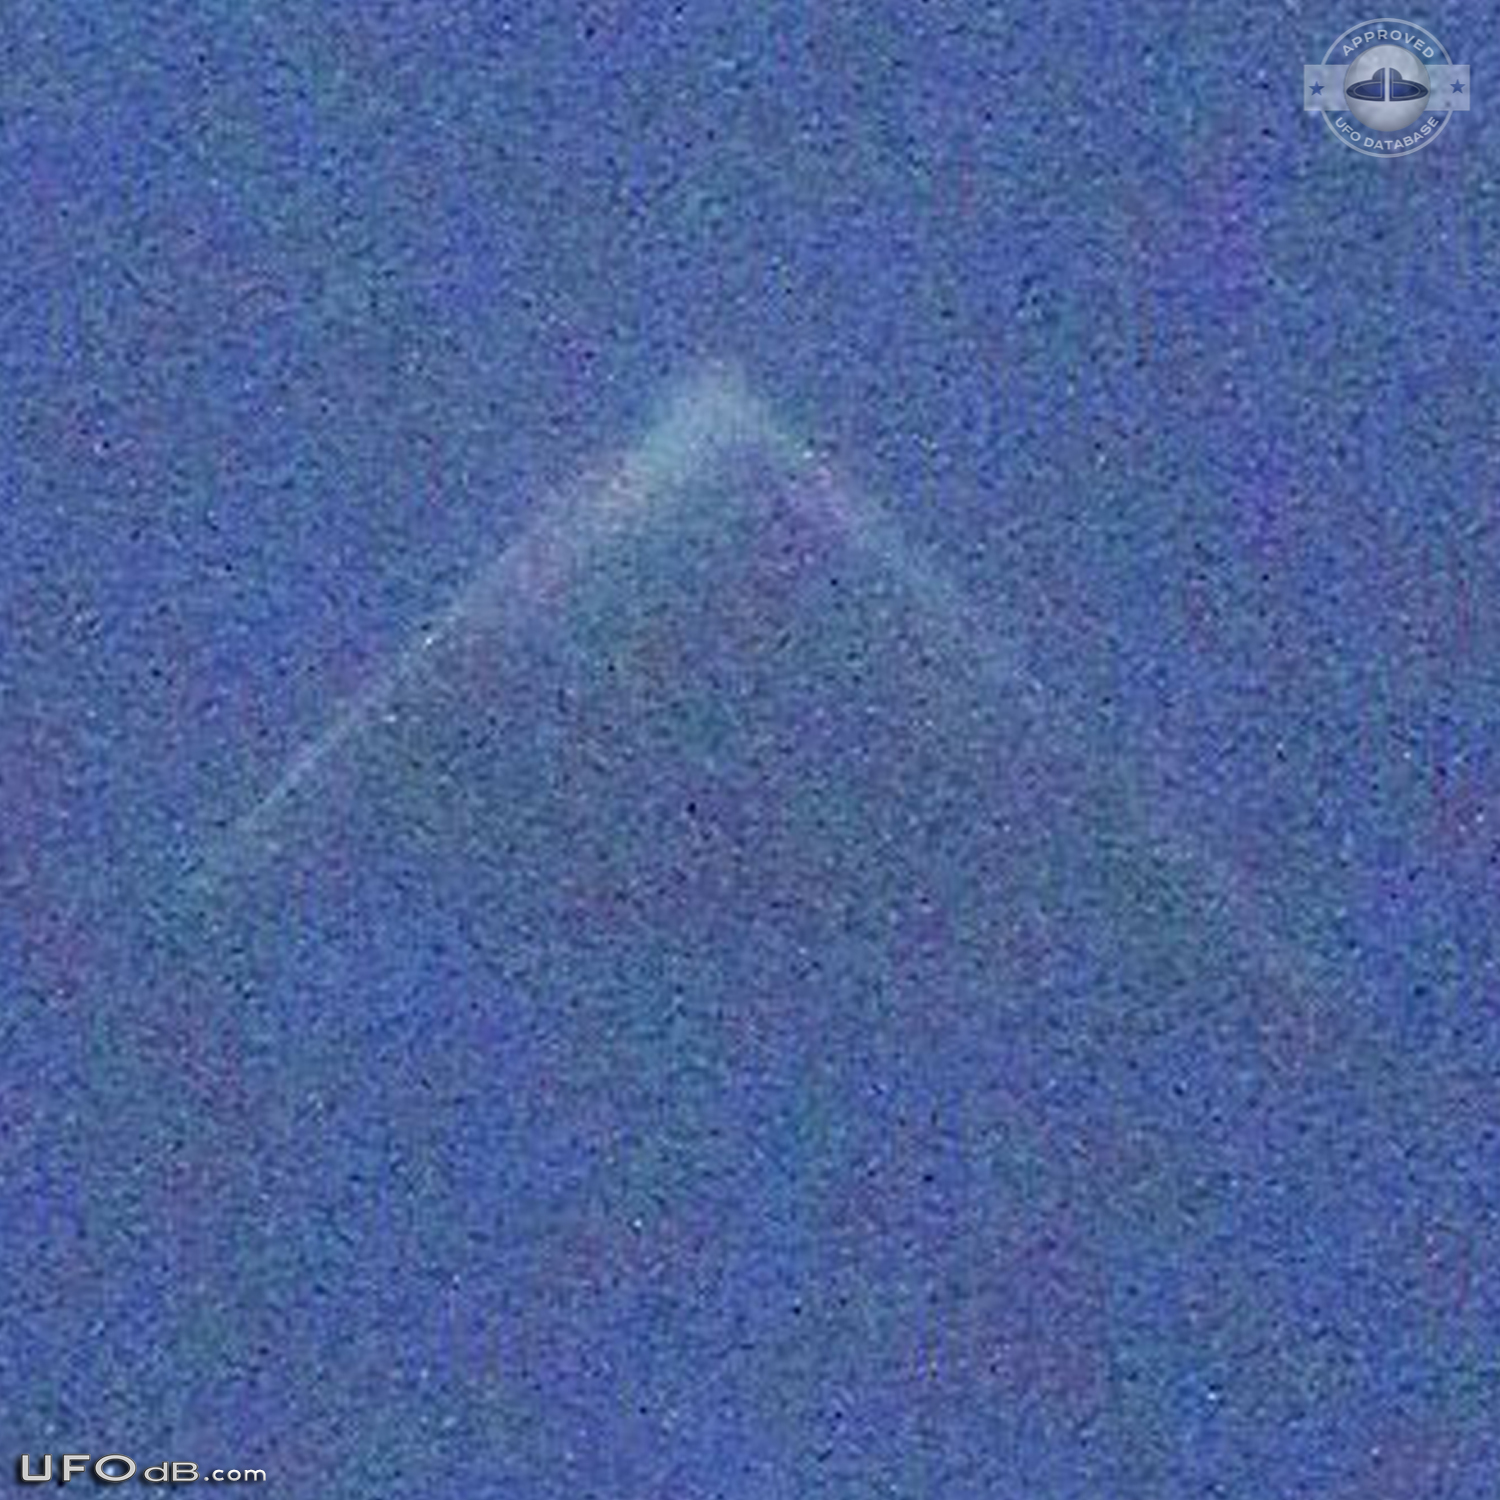 Photographer in Wichita, Kansas capture triangular UFO in bright day UFO Picture #563-2